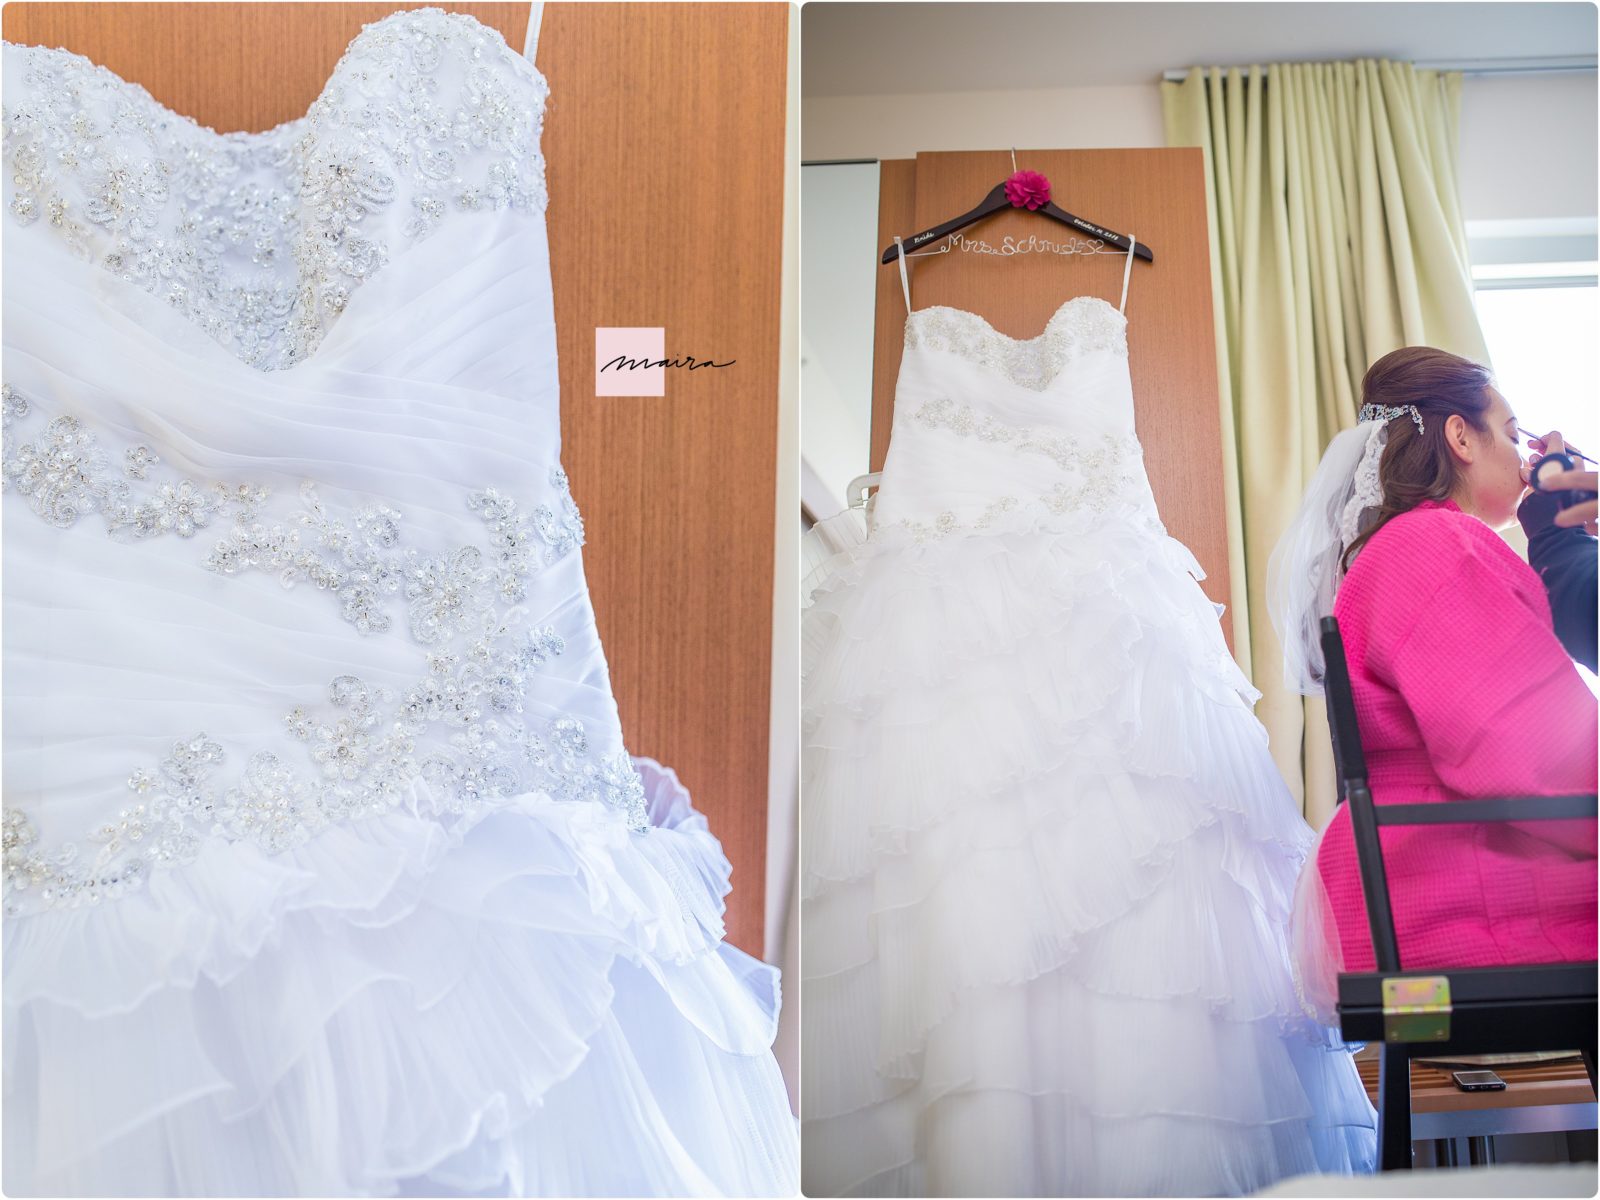 Blue brides high heels, Wedding details, brides earnings, Bride Getting ready, Brides Makeup artist, Wedding Dress